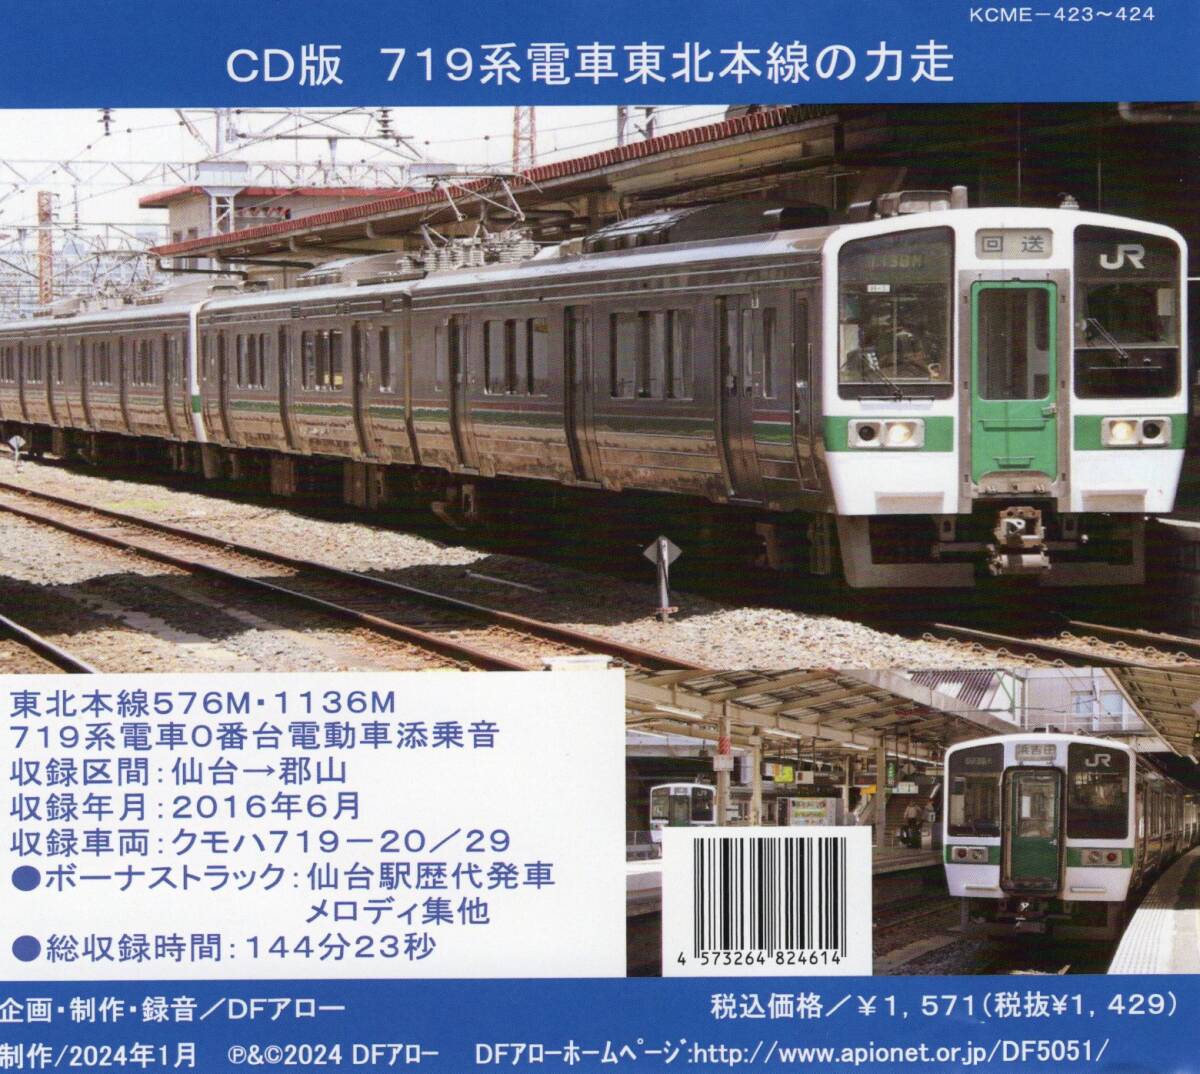 DF Arrow *CD version *EC-177*719 series train Tohoku book@ line. power mileage 